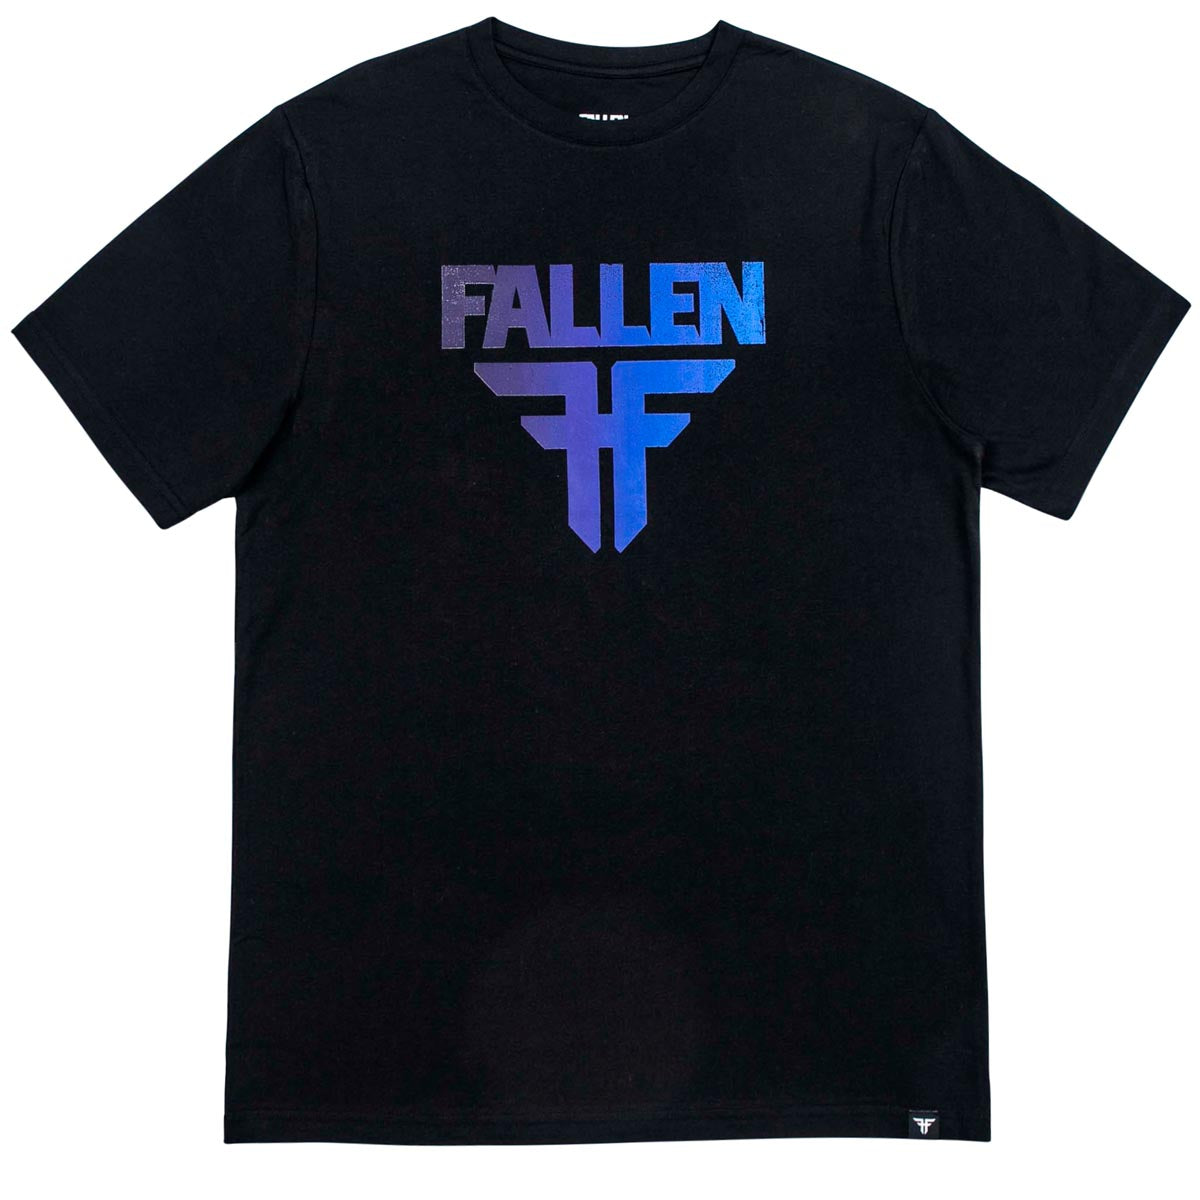 Fallen Insignia T-Shirt - Black/Purple image 1